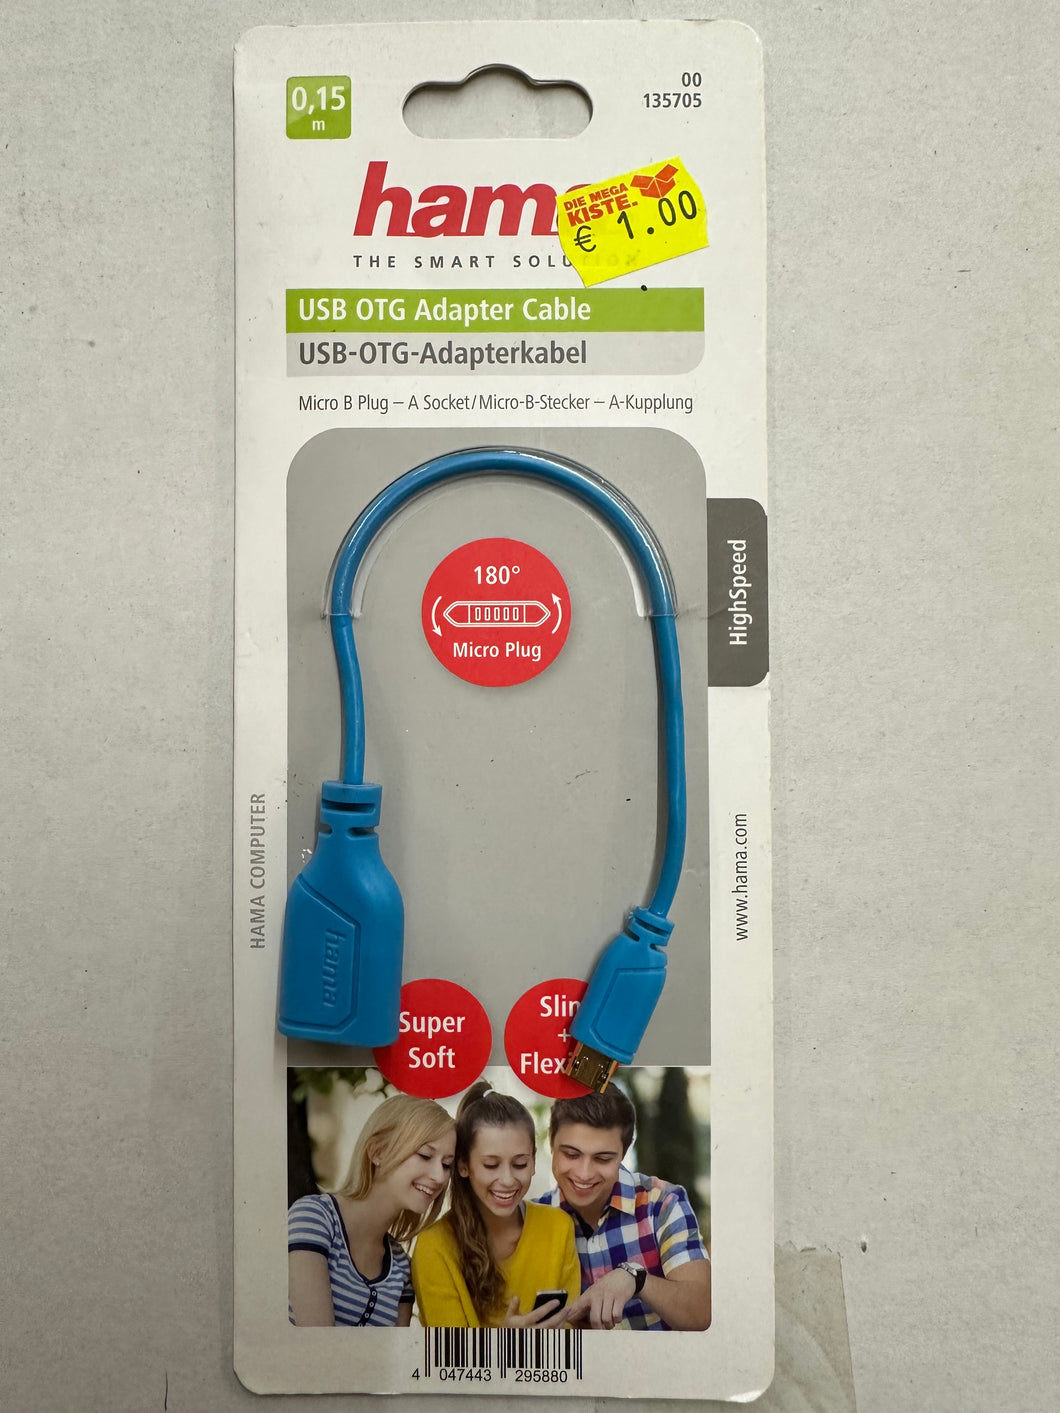 Hama 00135705 Micro-USB-OTG-Adapterkabel 